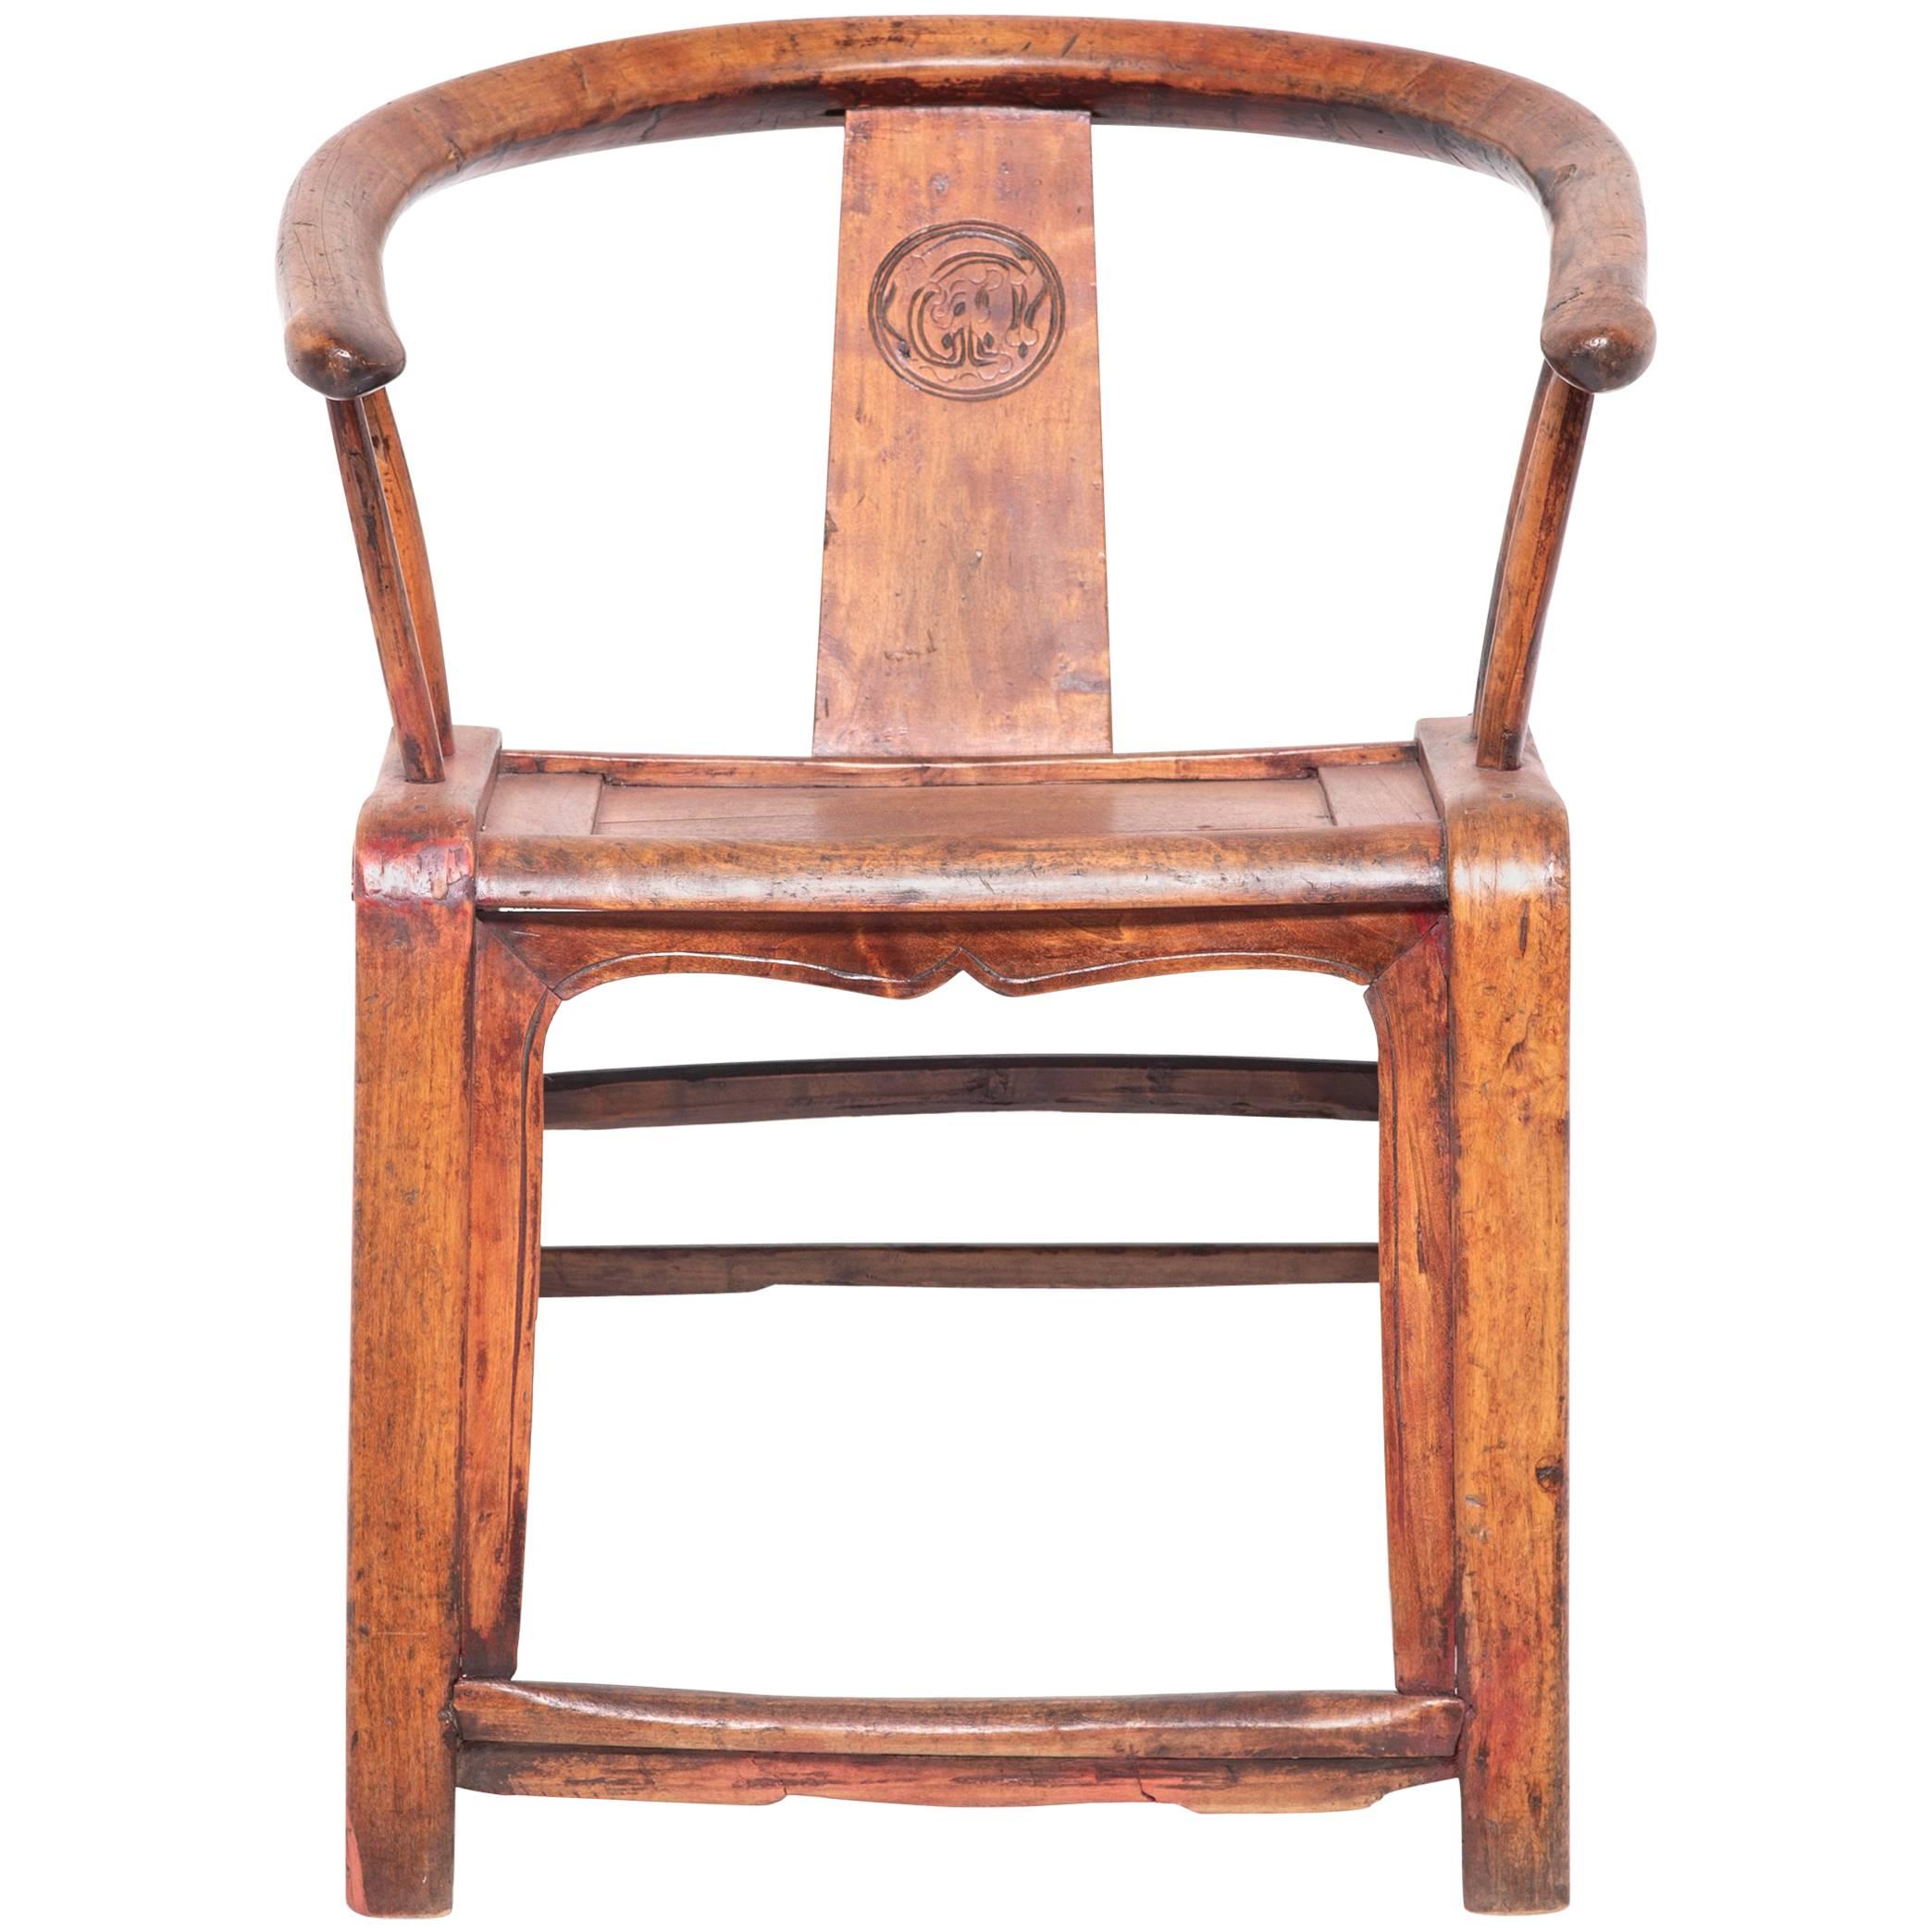 19th Century Chinese Bentwood Roundback Chair